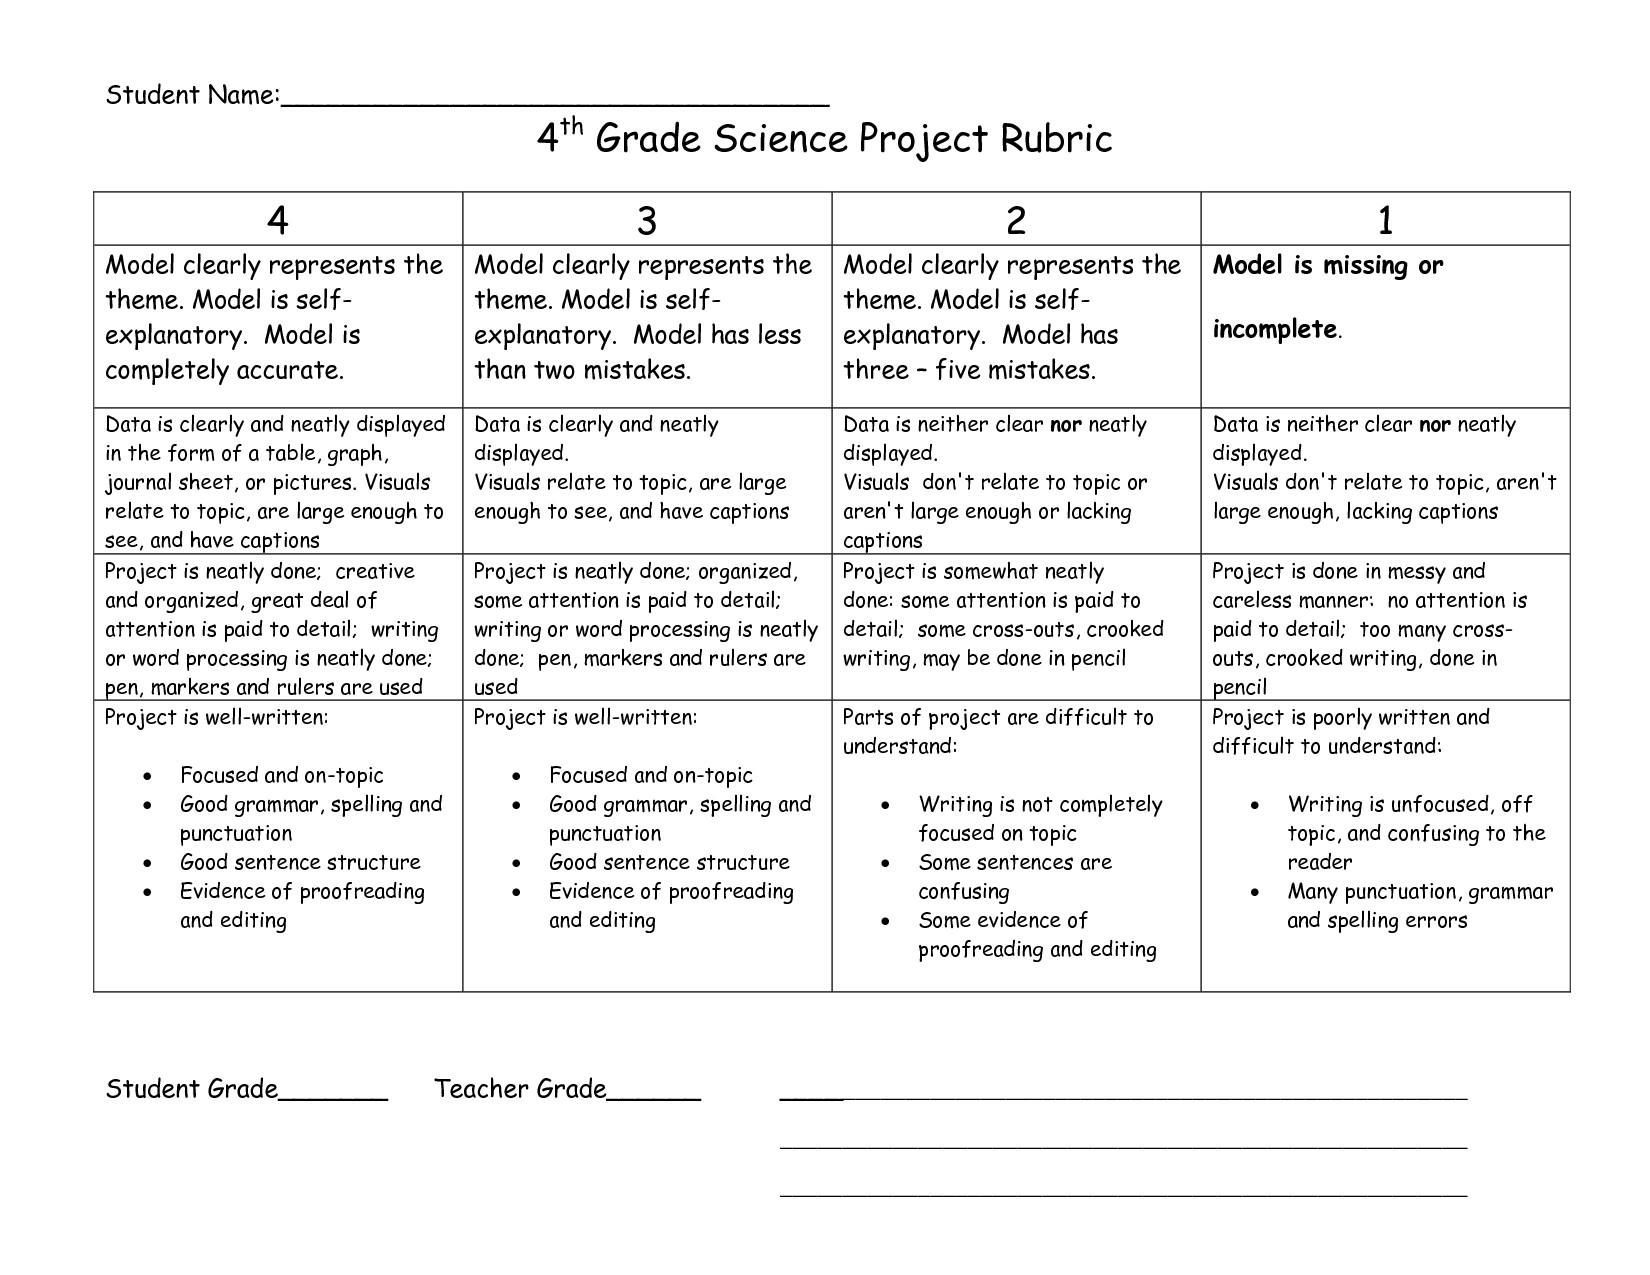 4th Grade Science Project Rubric